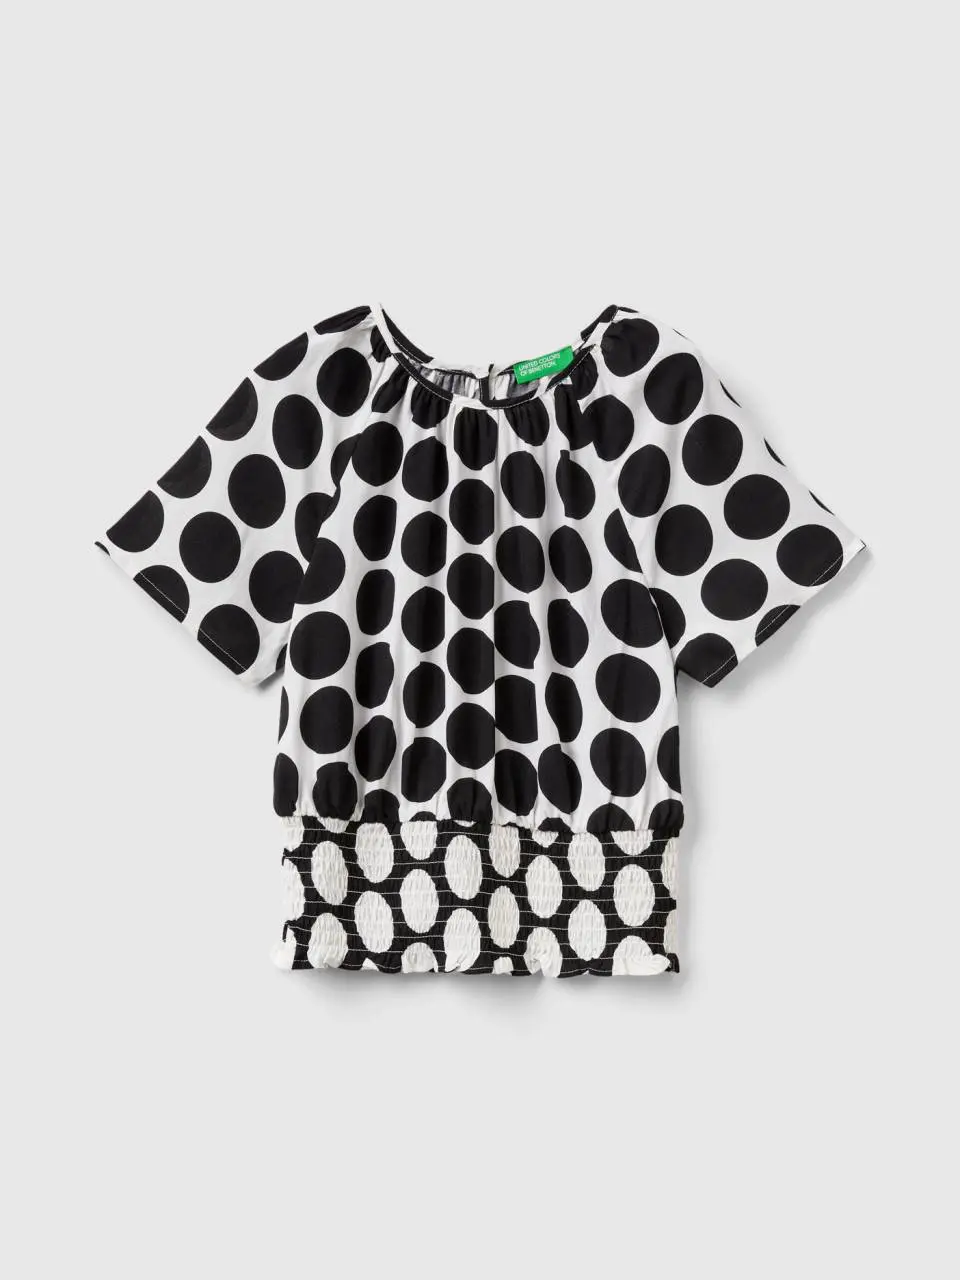 Benetton flowy polka dot blouse. 1